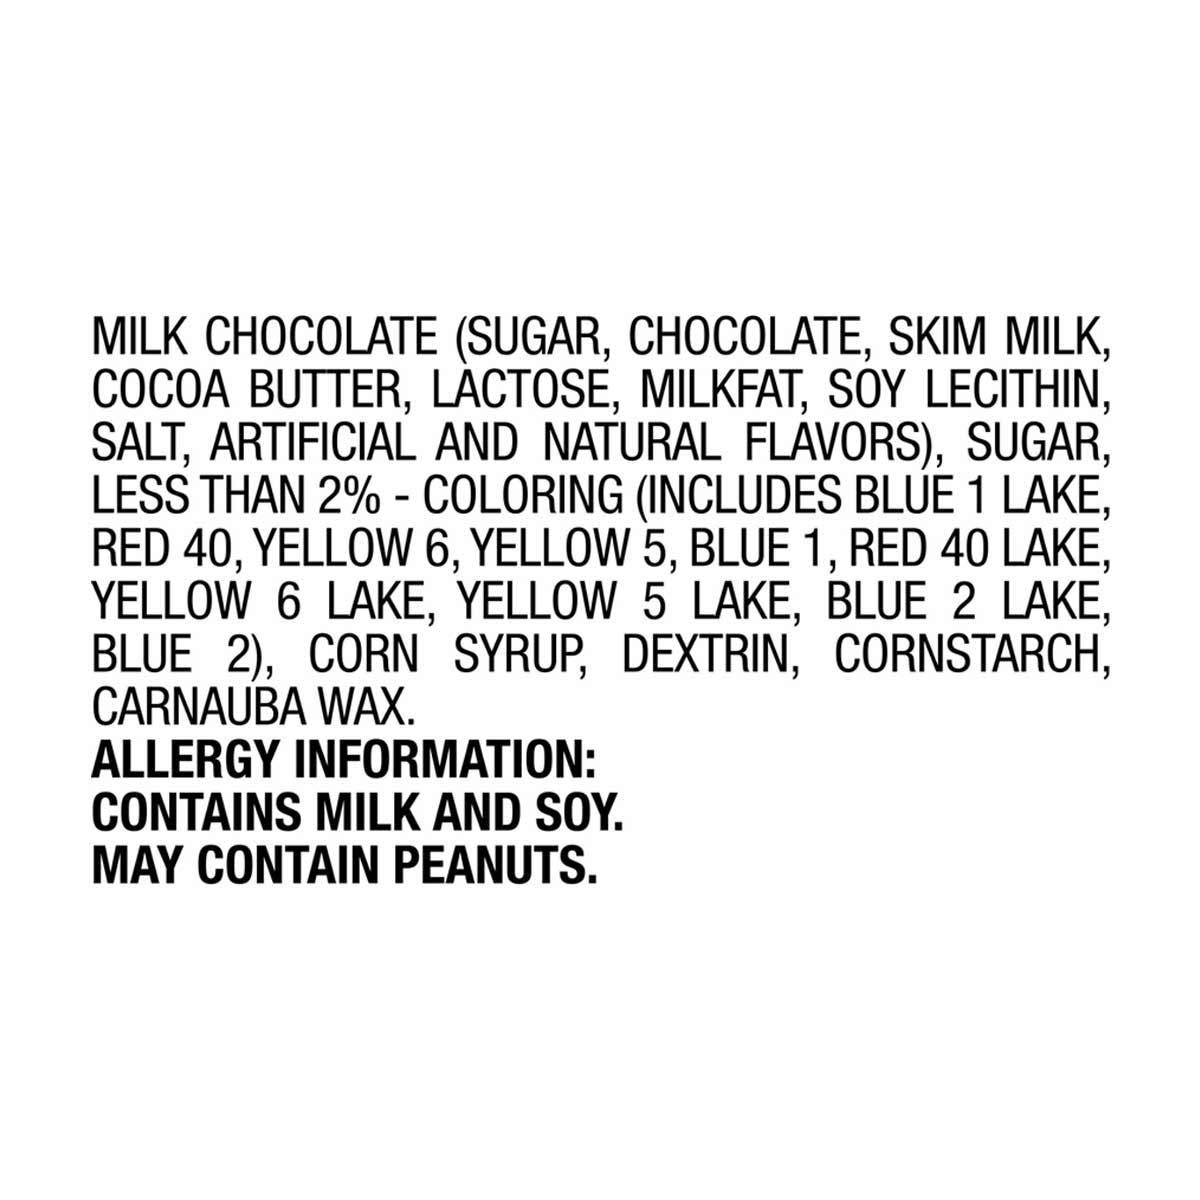 M&M's Milk Chocolate Minis Size Candy Tube, 1.77 oz